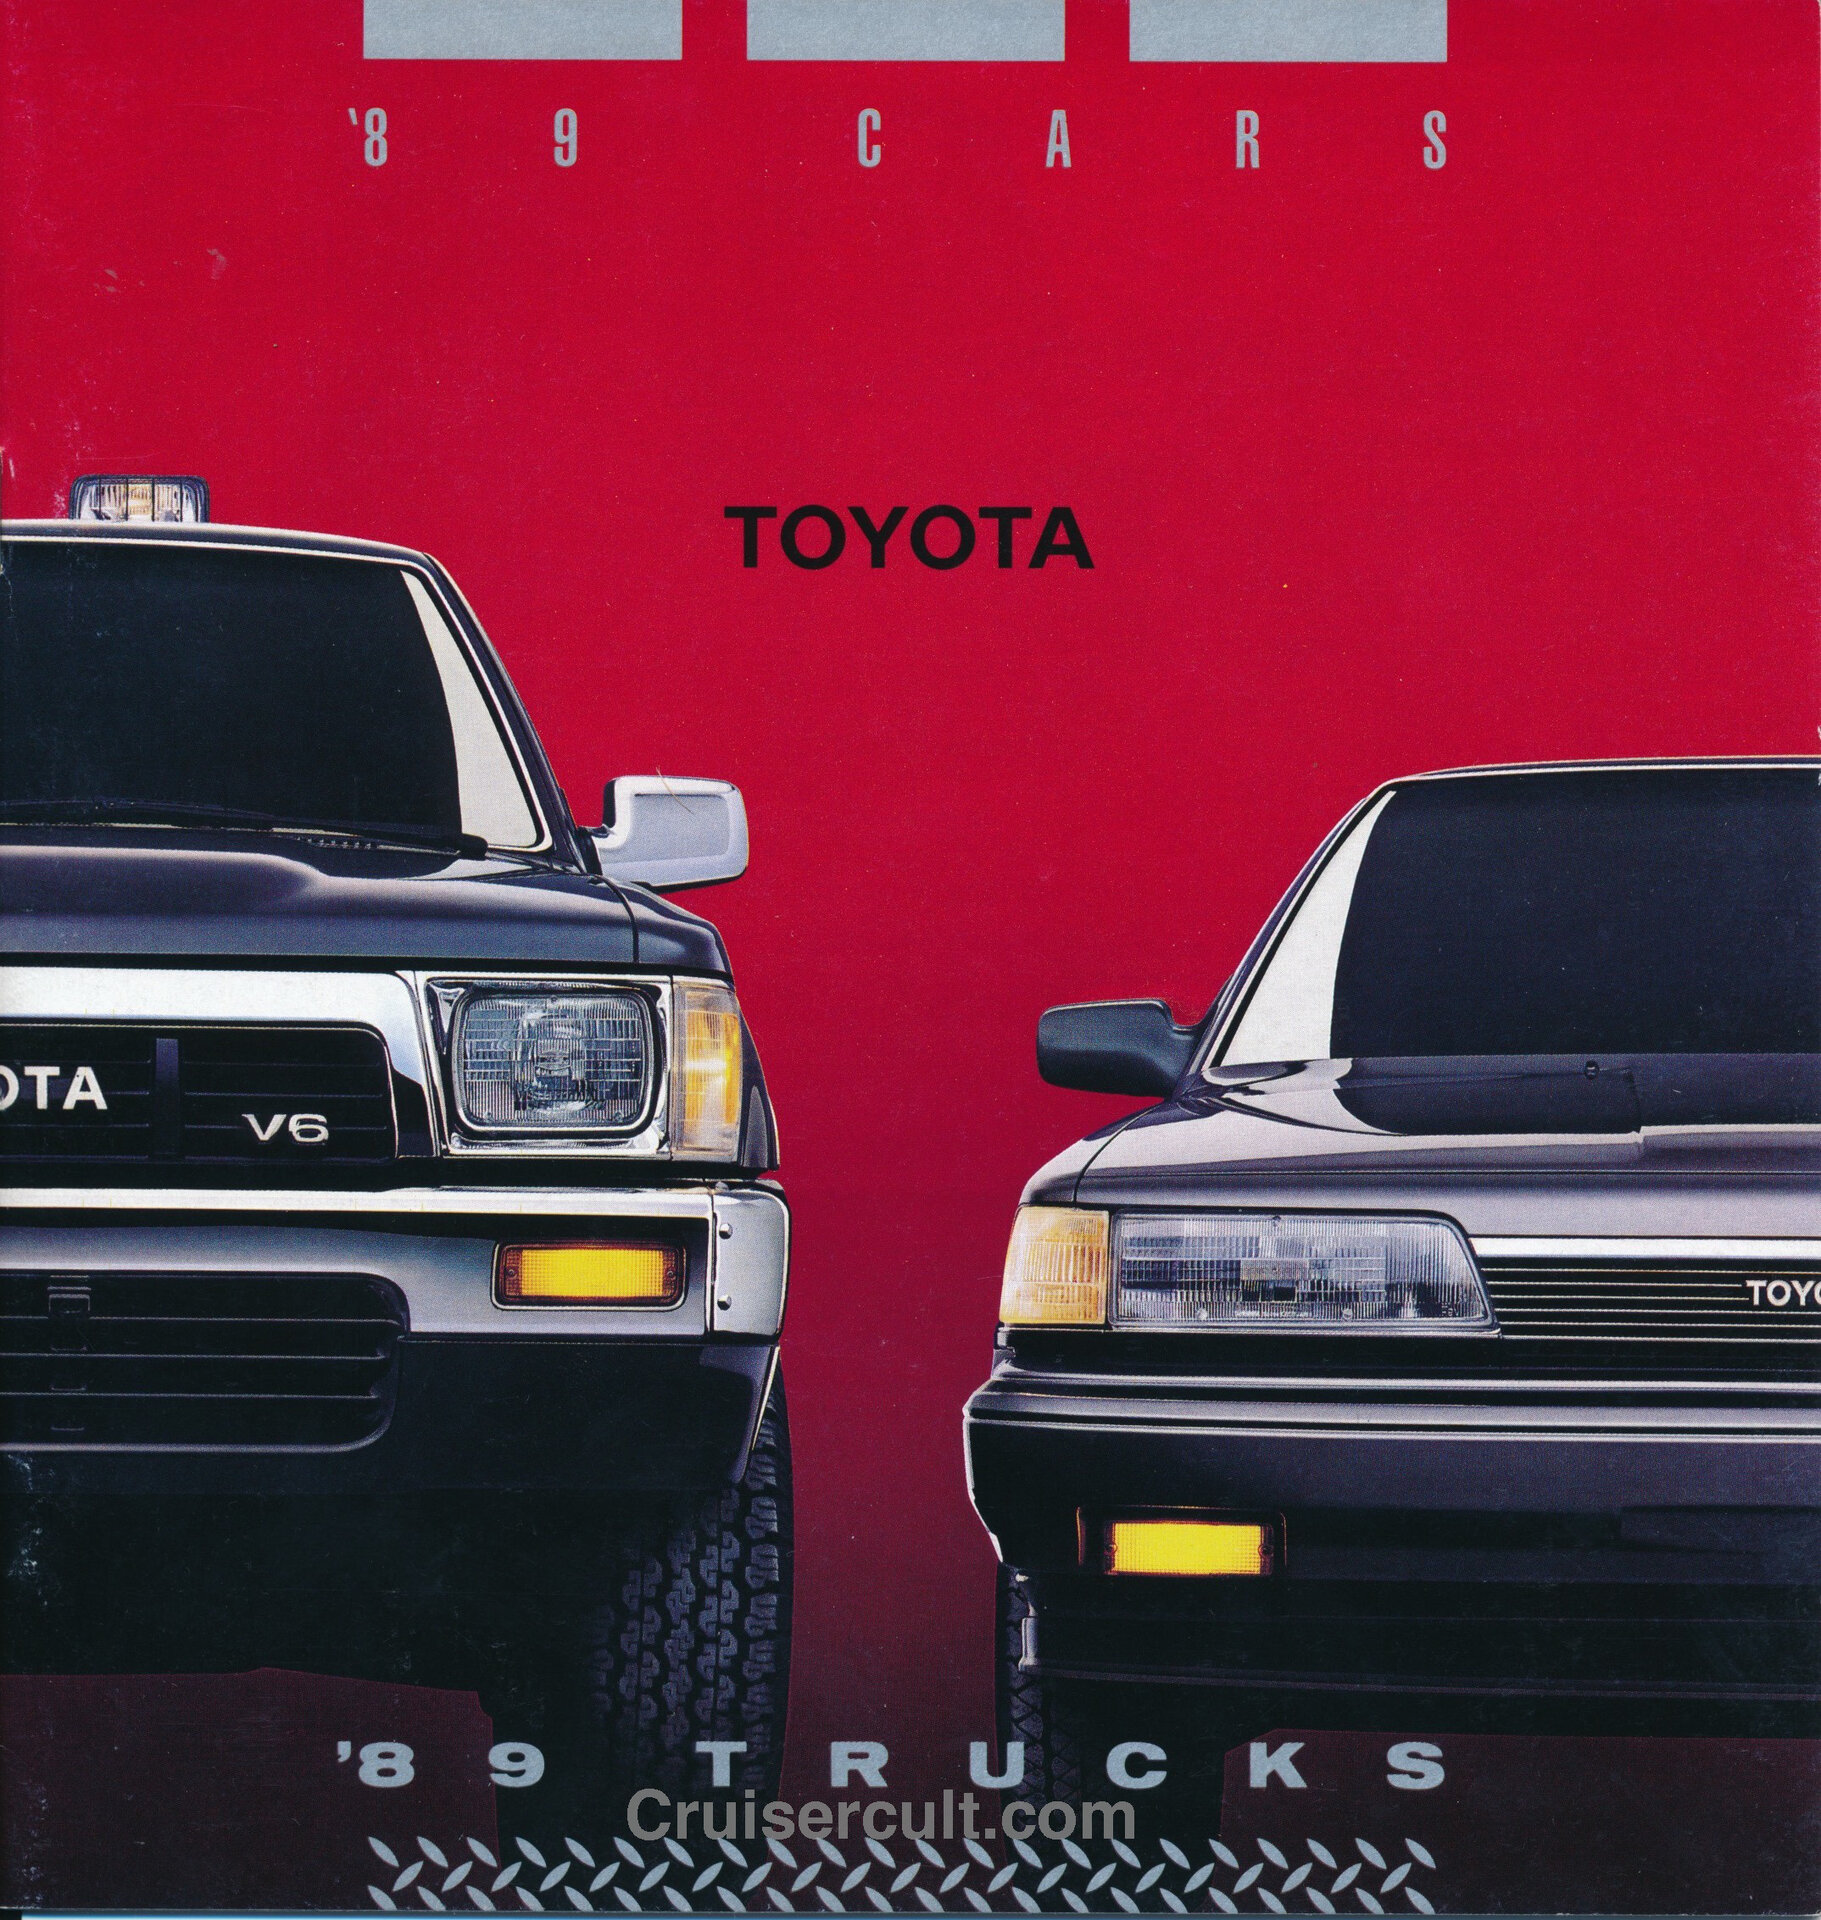 1989 USA brochureCC.jpeg